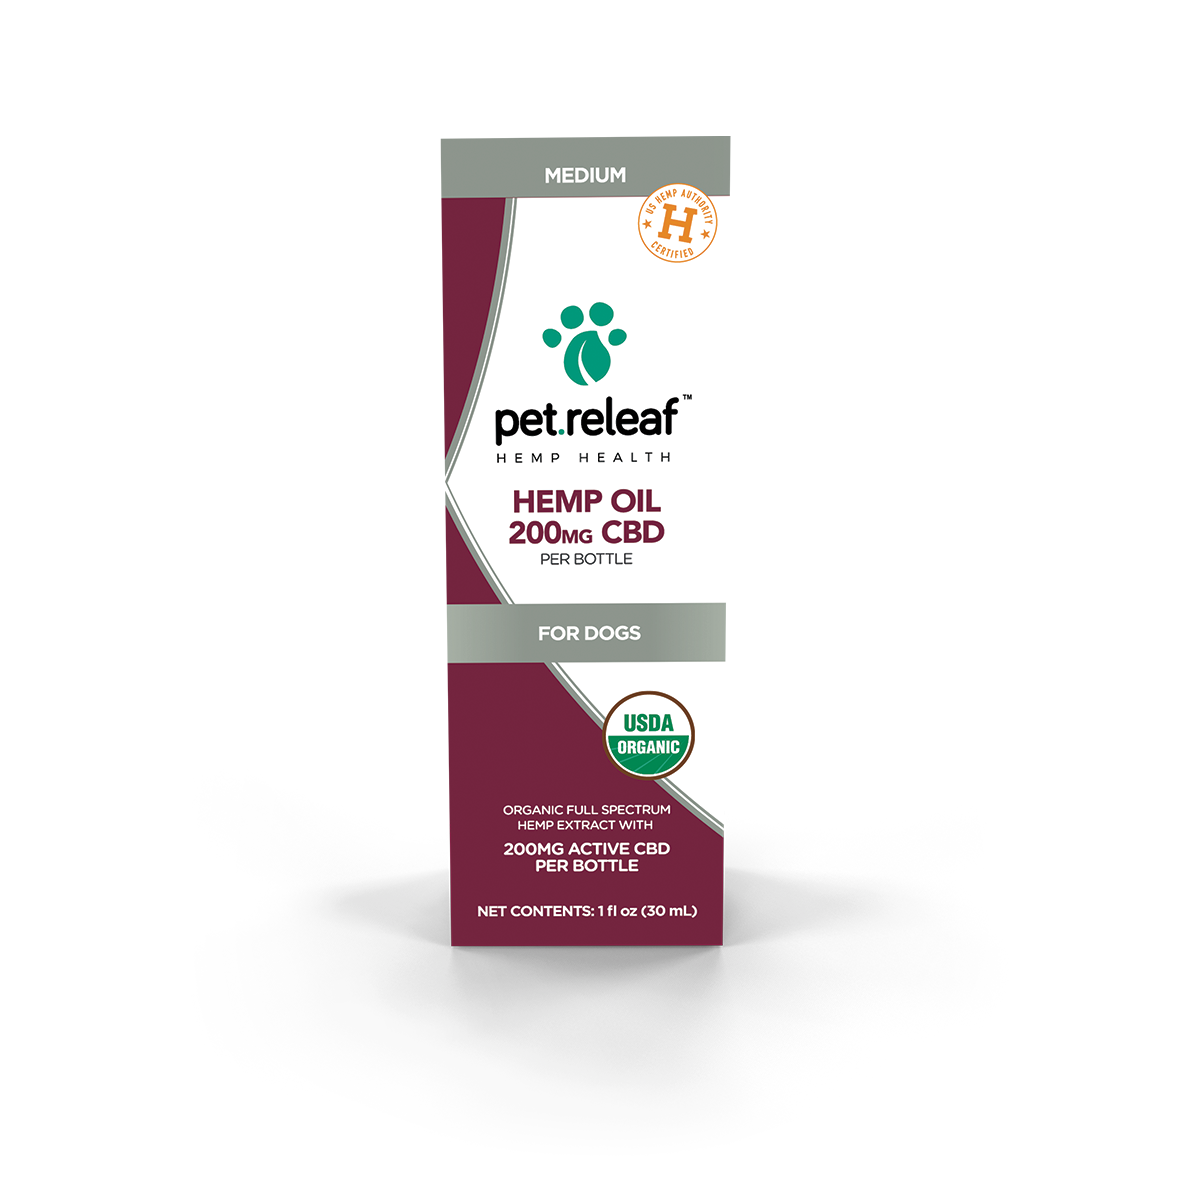 New CBD Hemp Oil Packaging - Pet Releaf Hemp Oil for Dogs - Pet Releaf